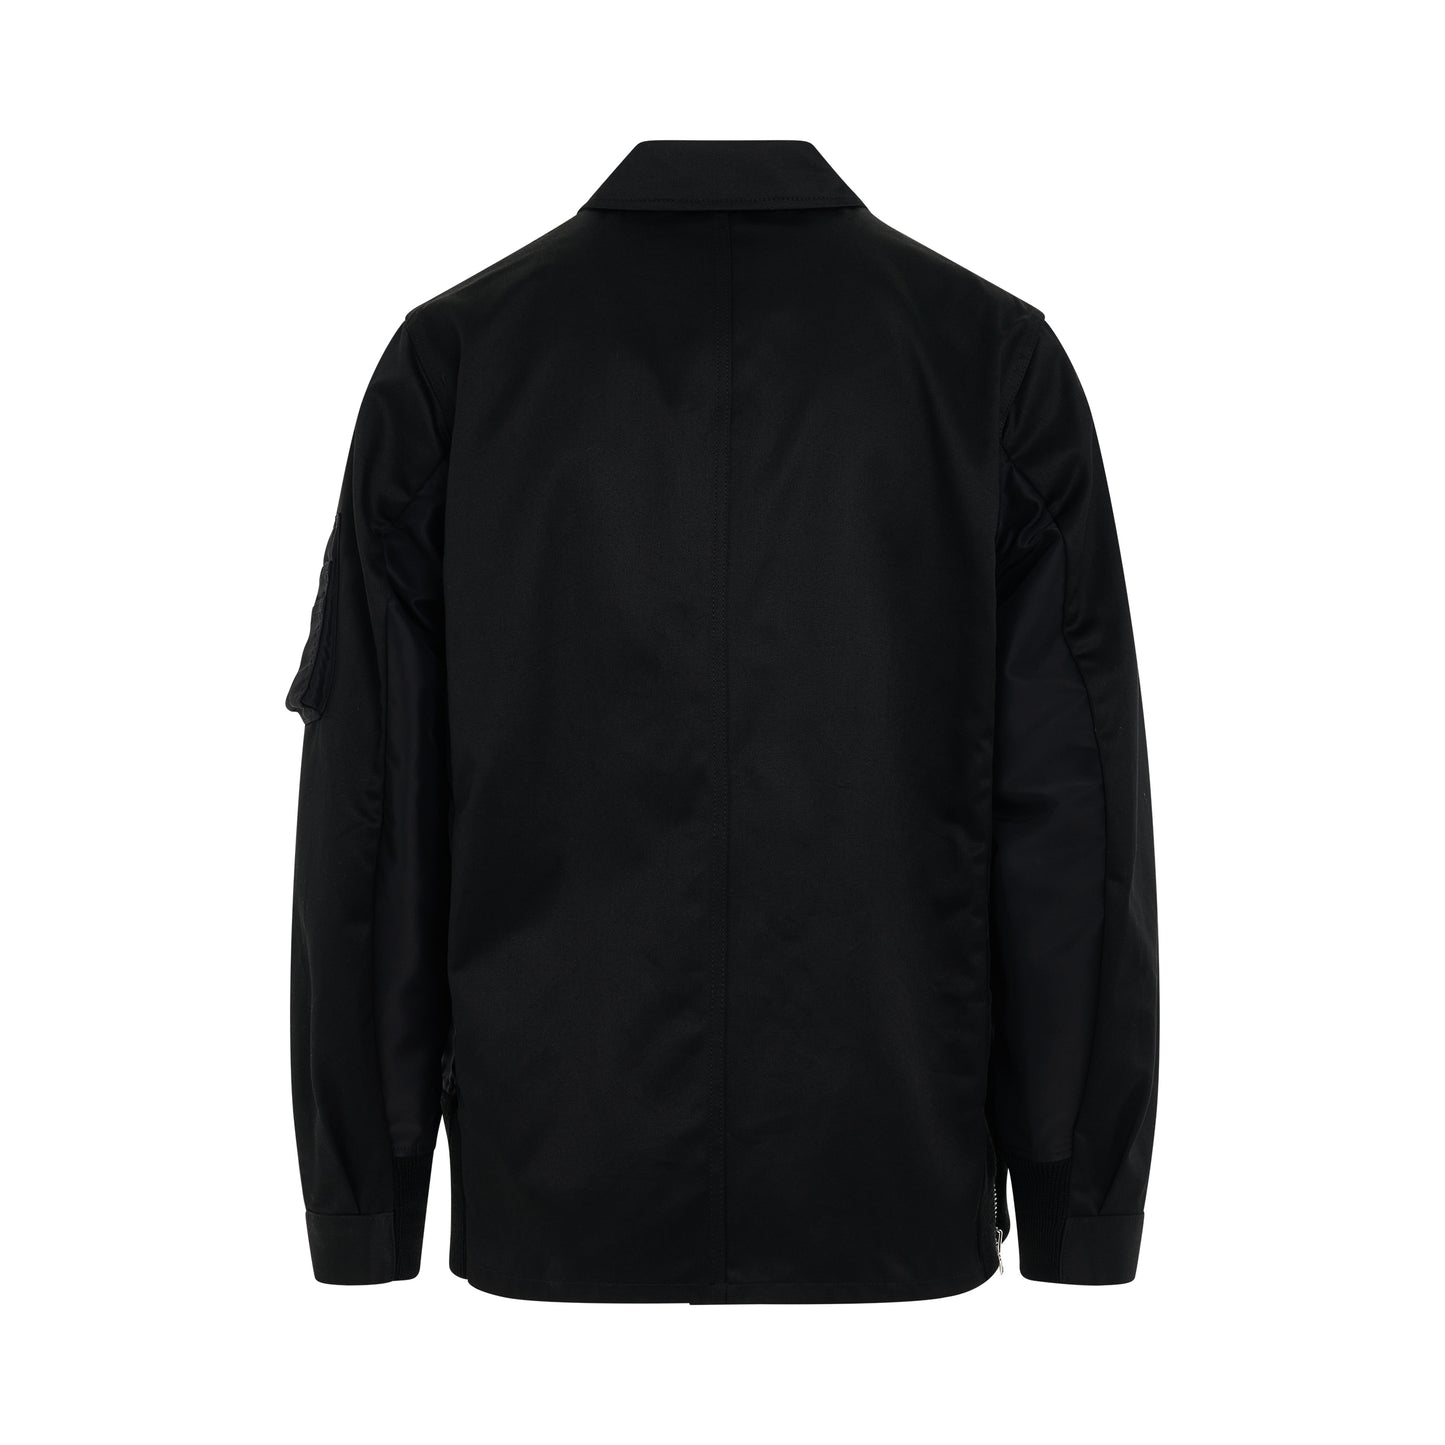 Cotton Chino x Nylon Twill Jacket in Black